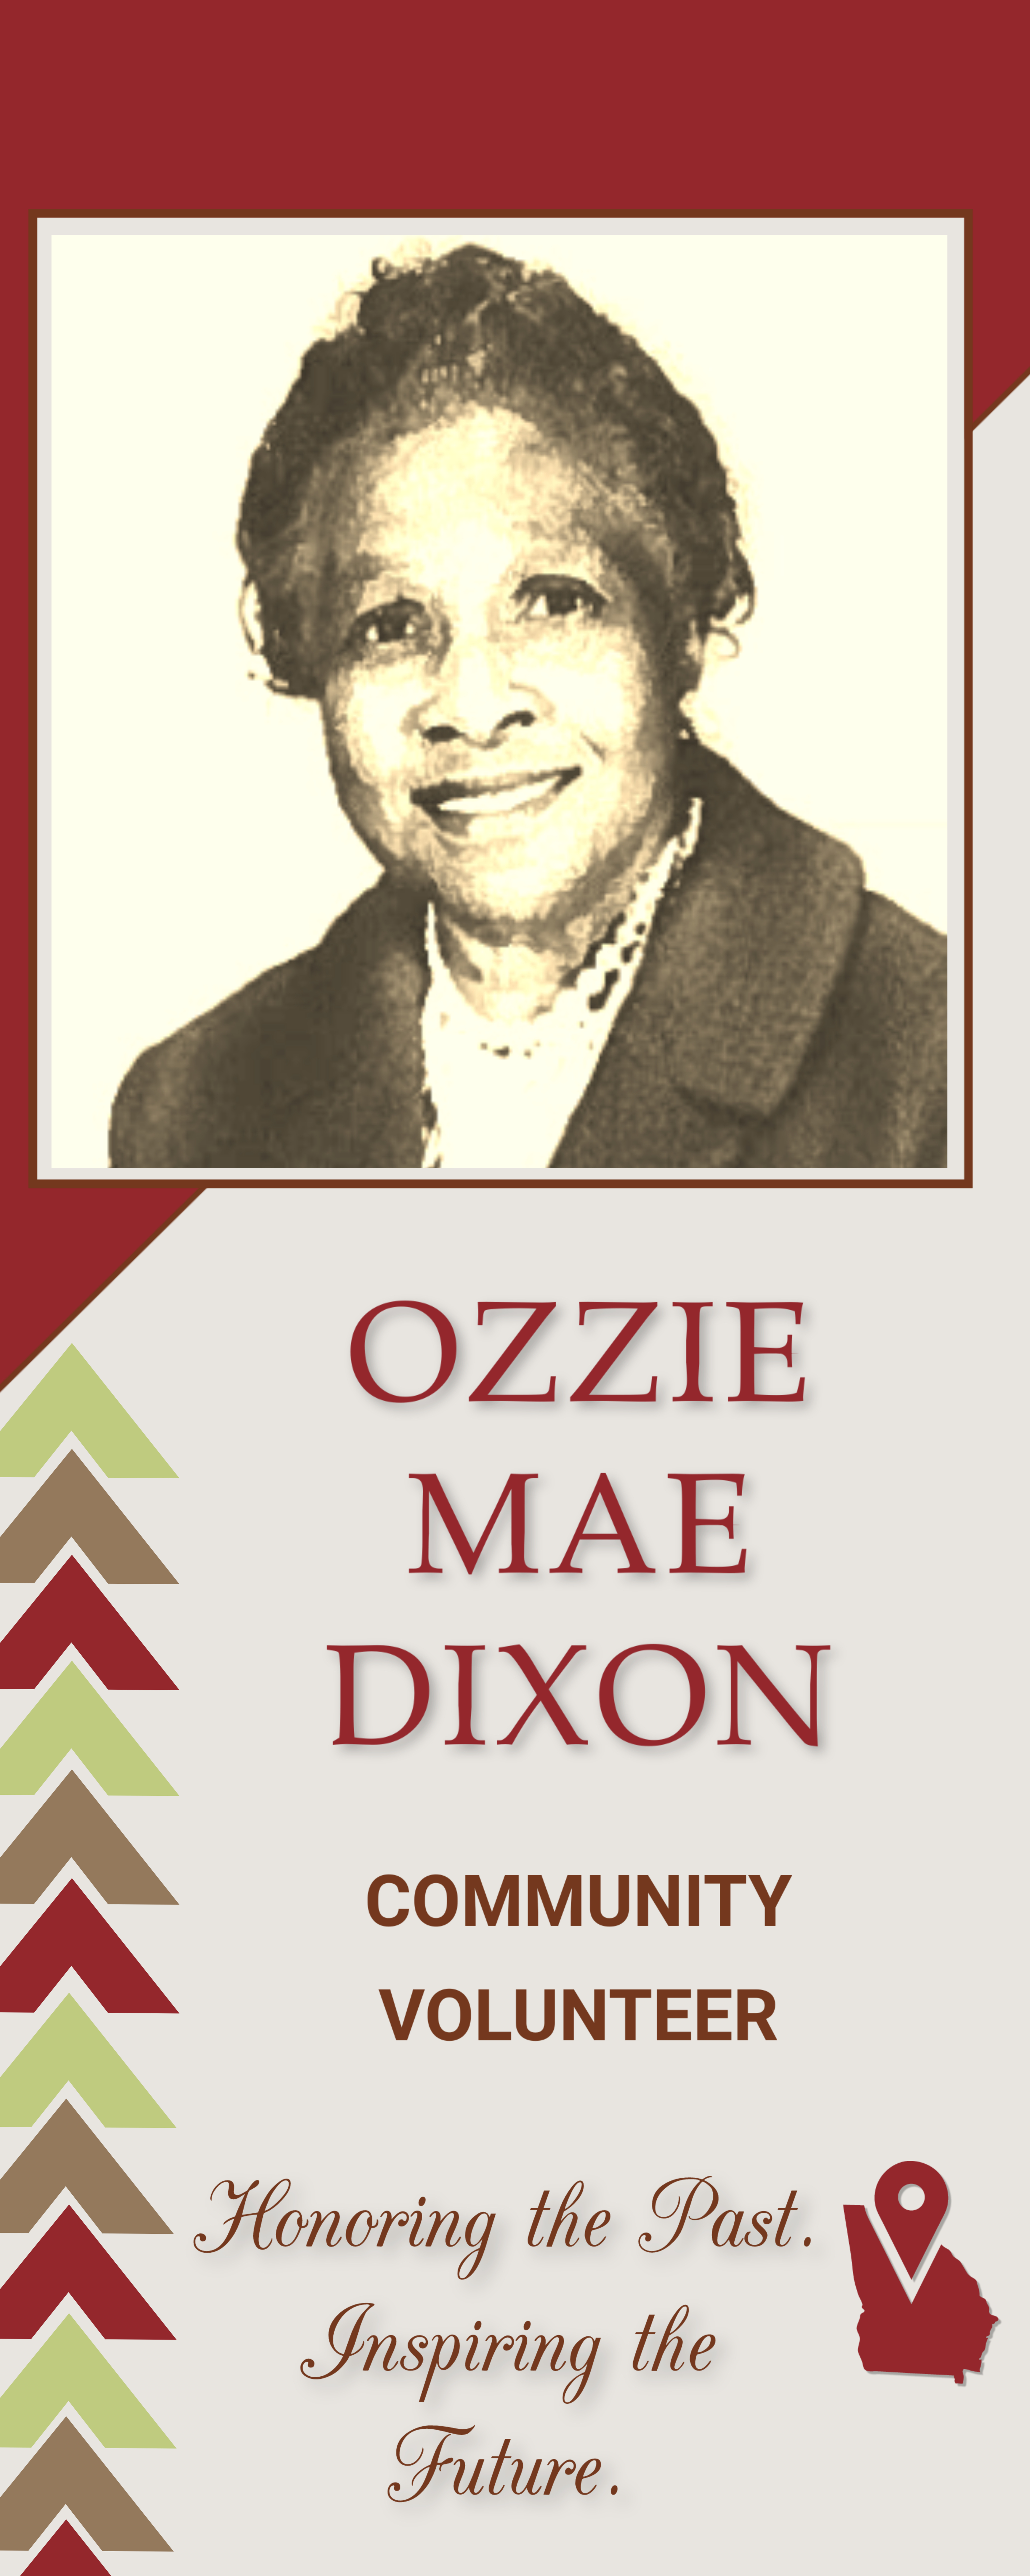 Ozzie Mae Dixon